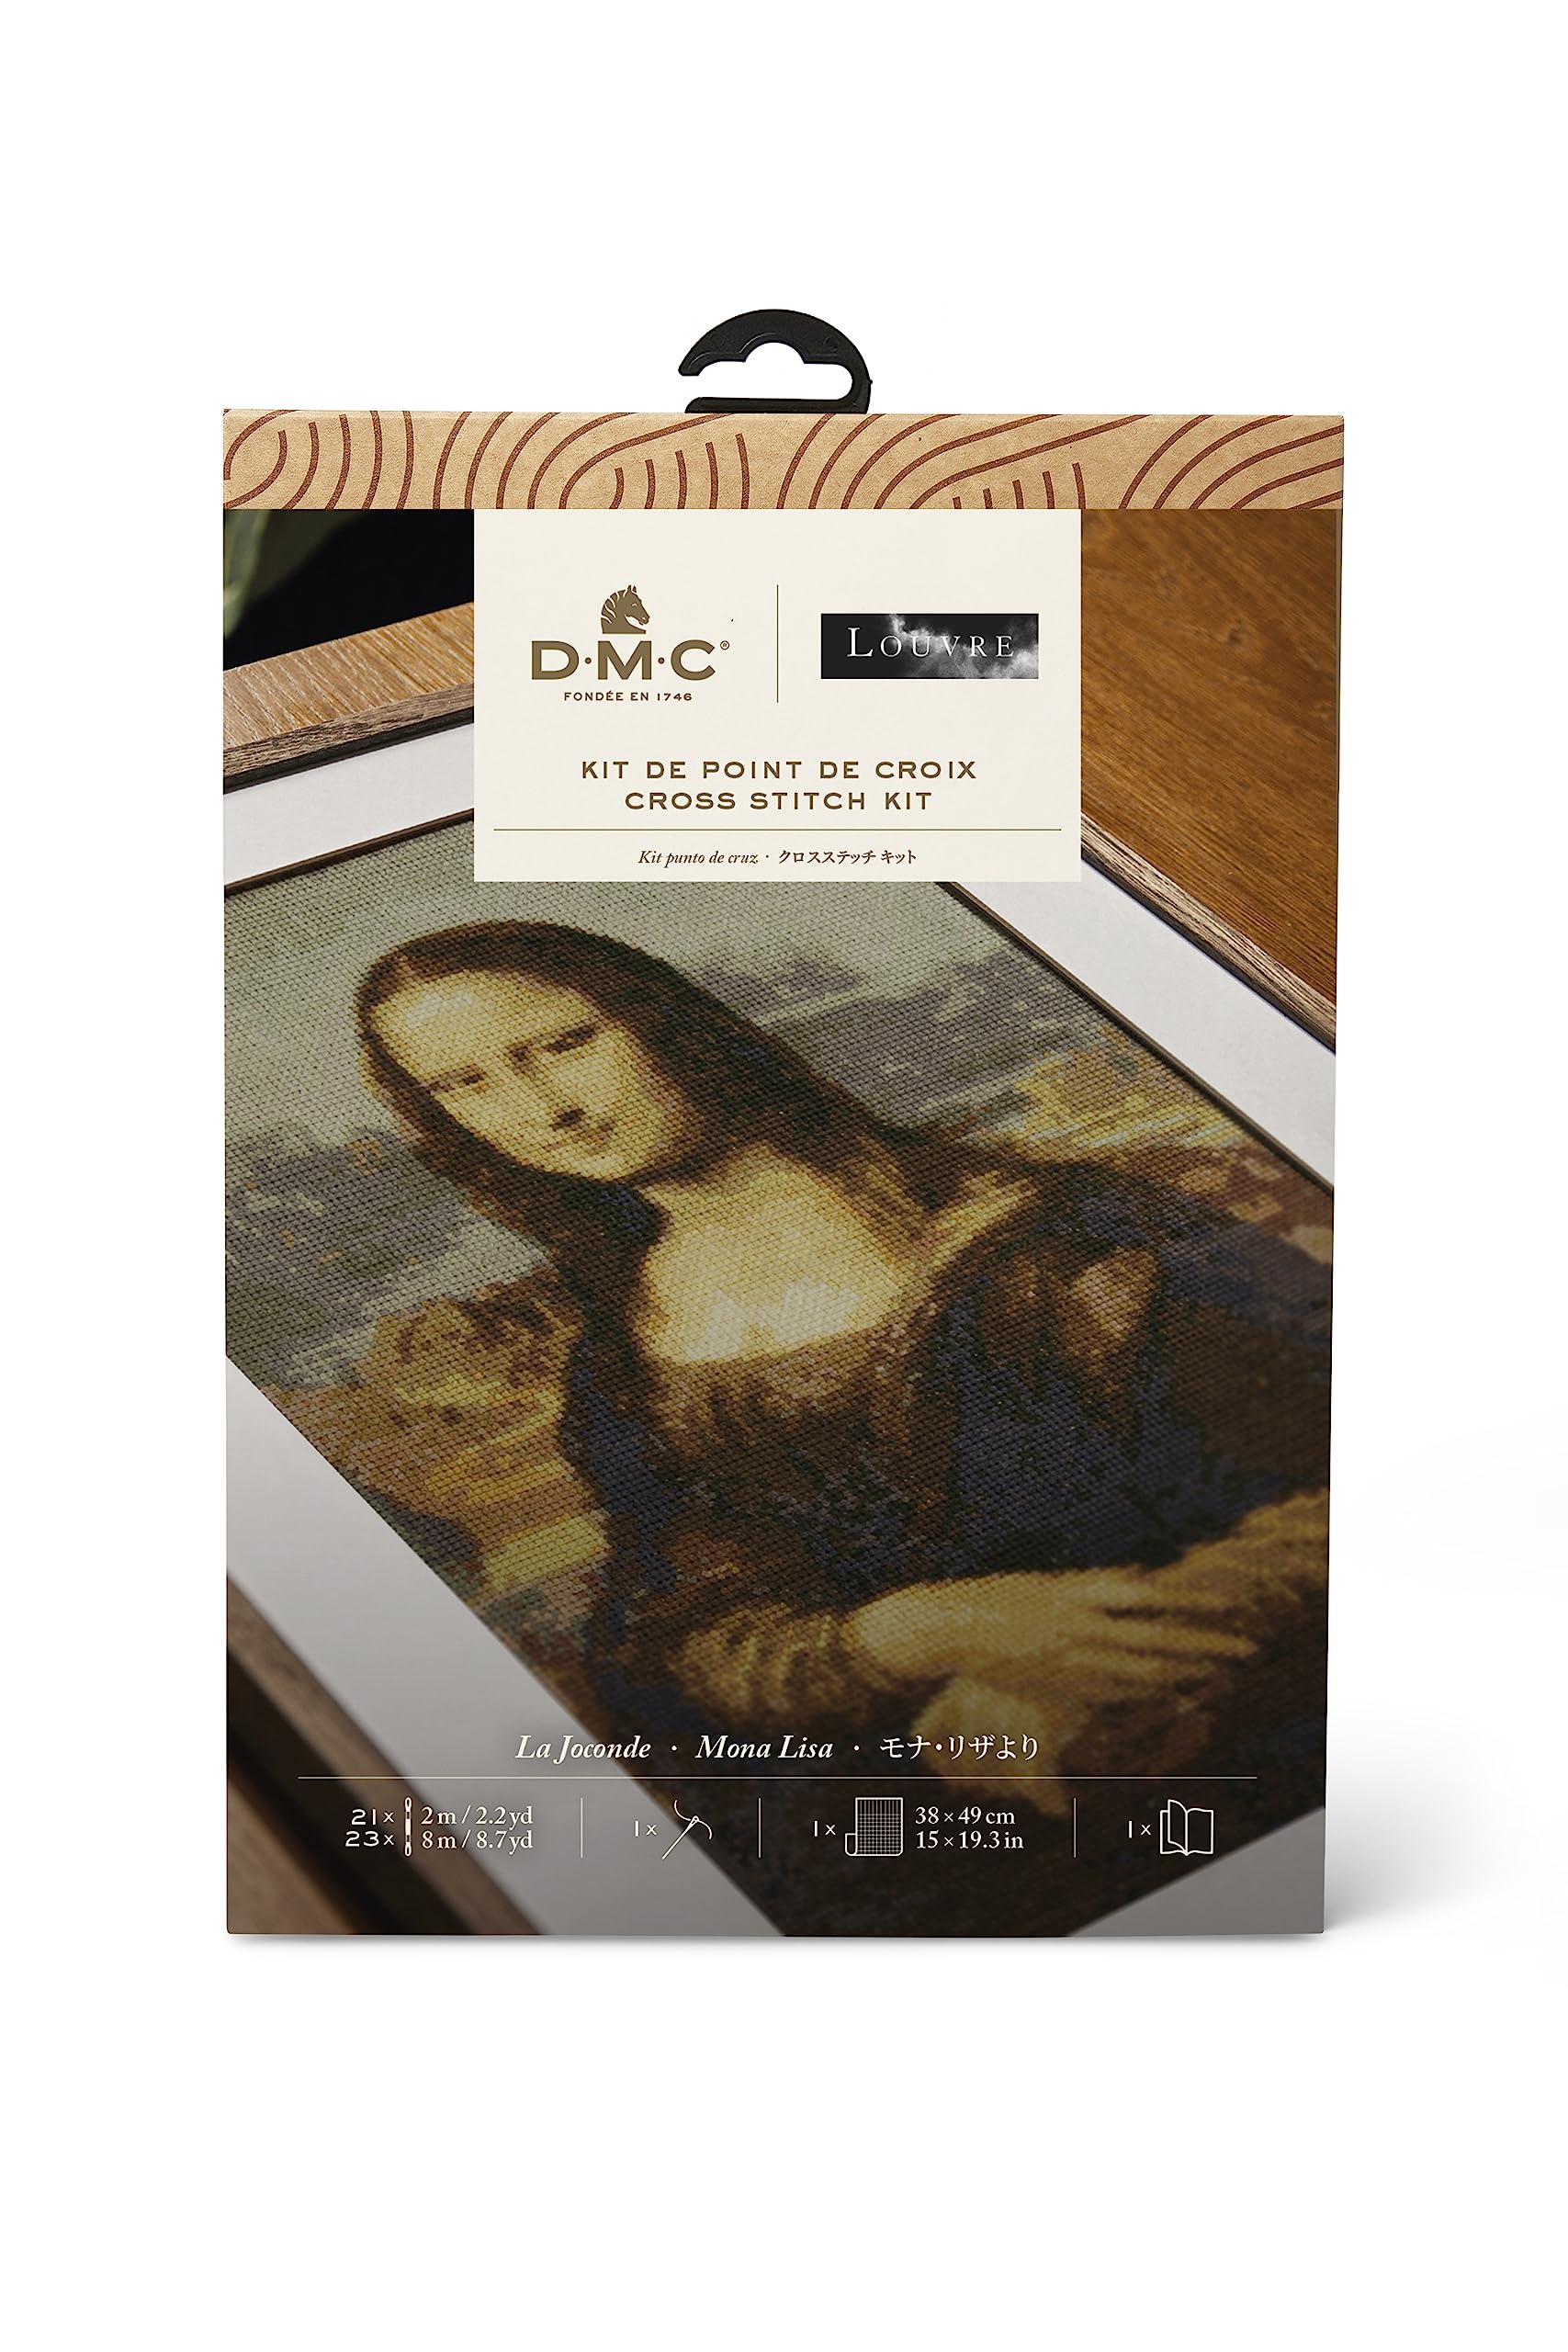 DMC - Mona Lisa von Leonardo da Vinci, Le Louvre, Kreuzstichset Niveau fortgeschritten